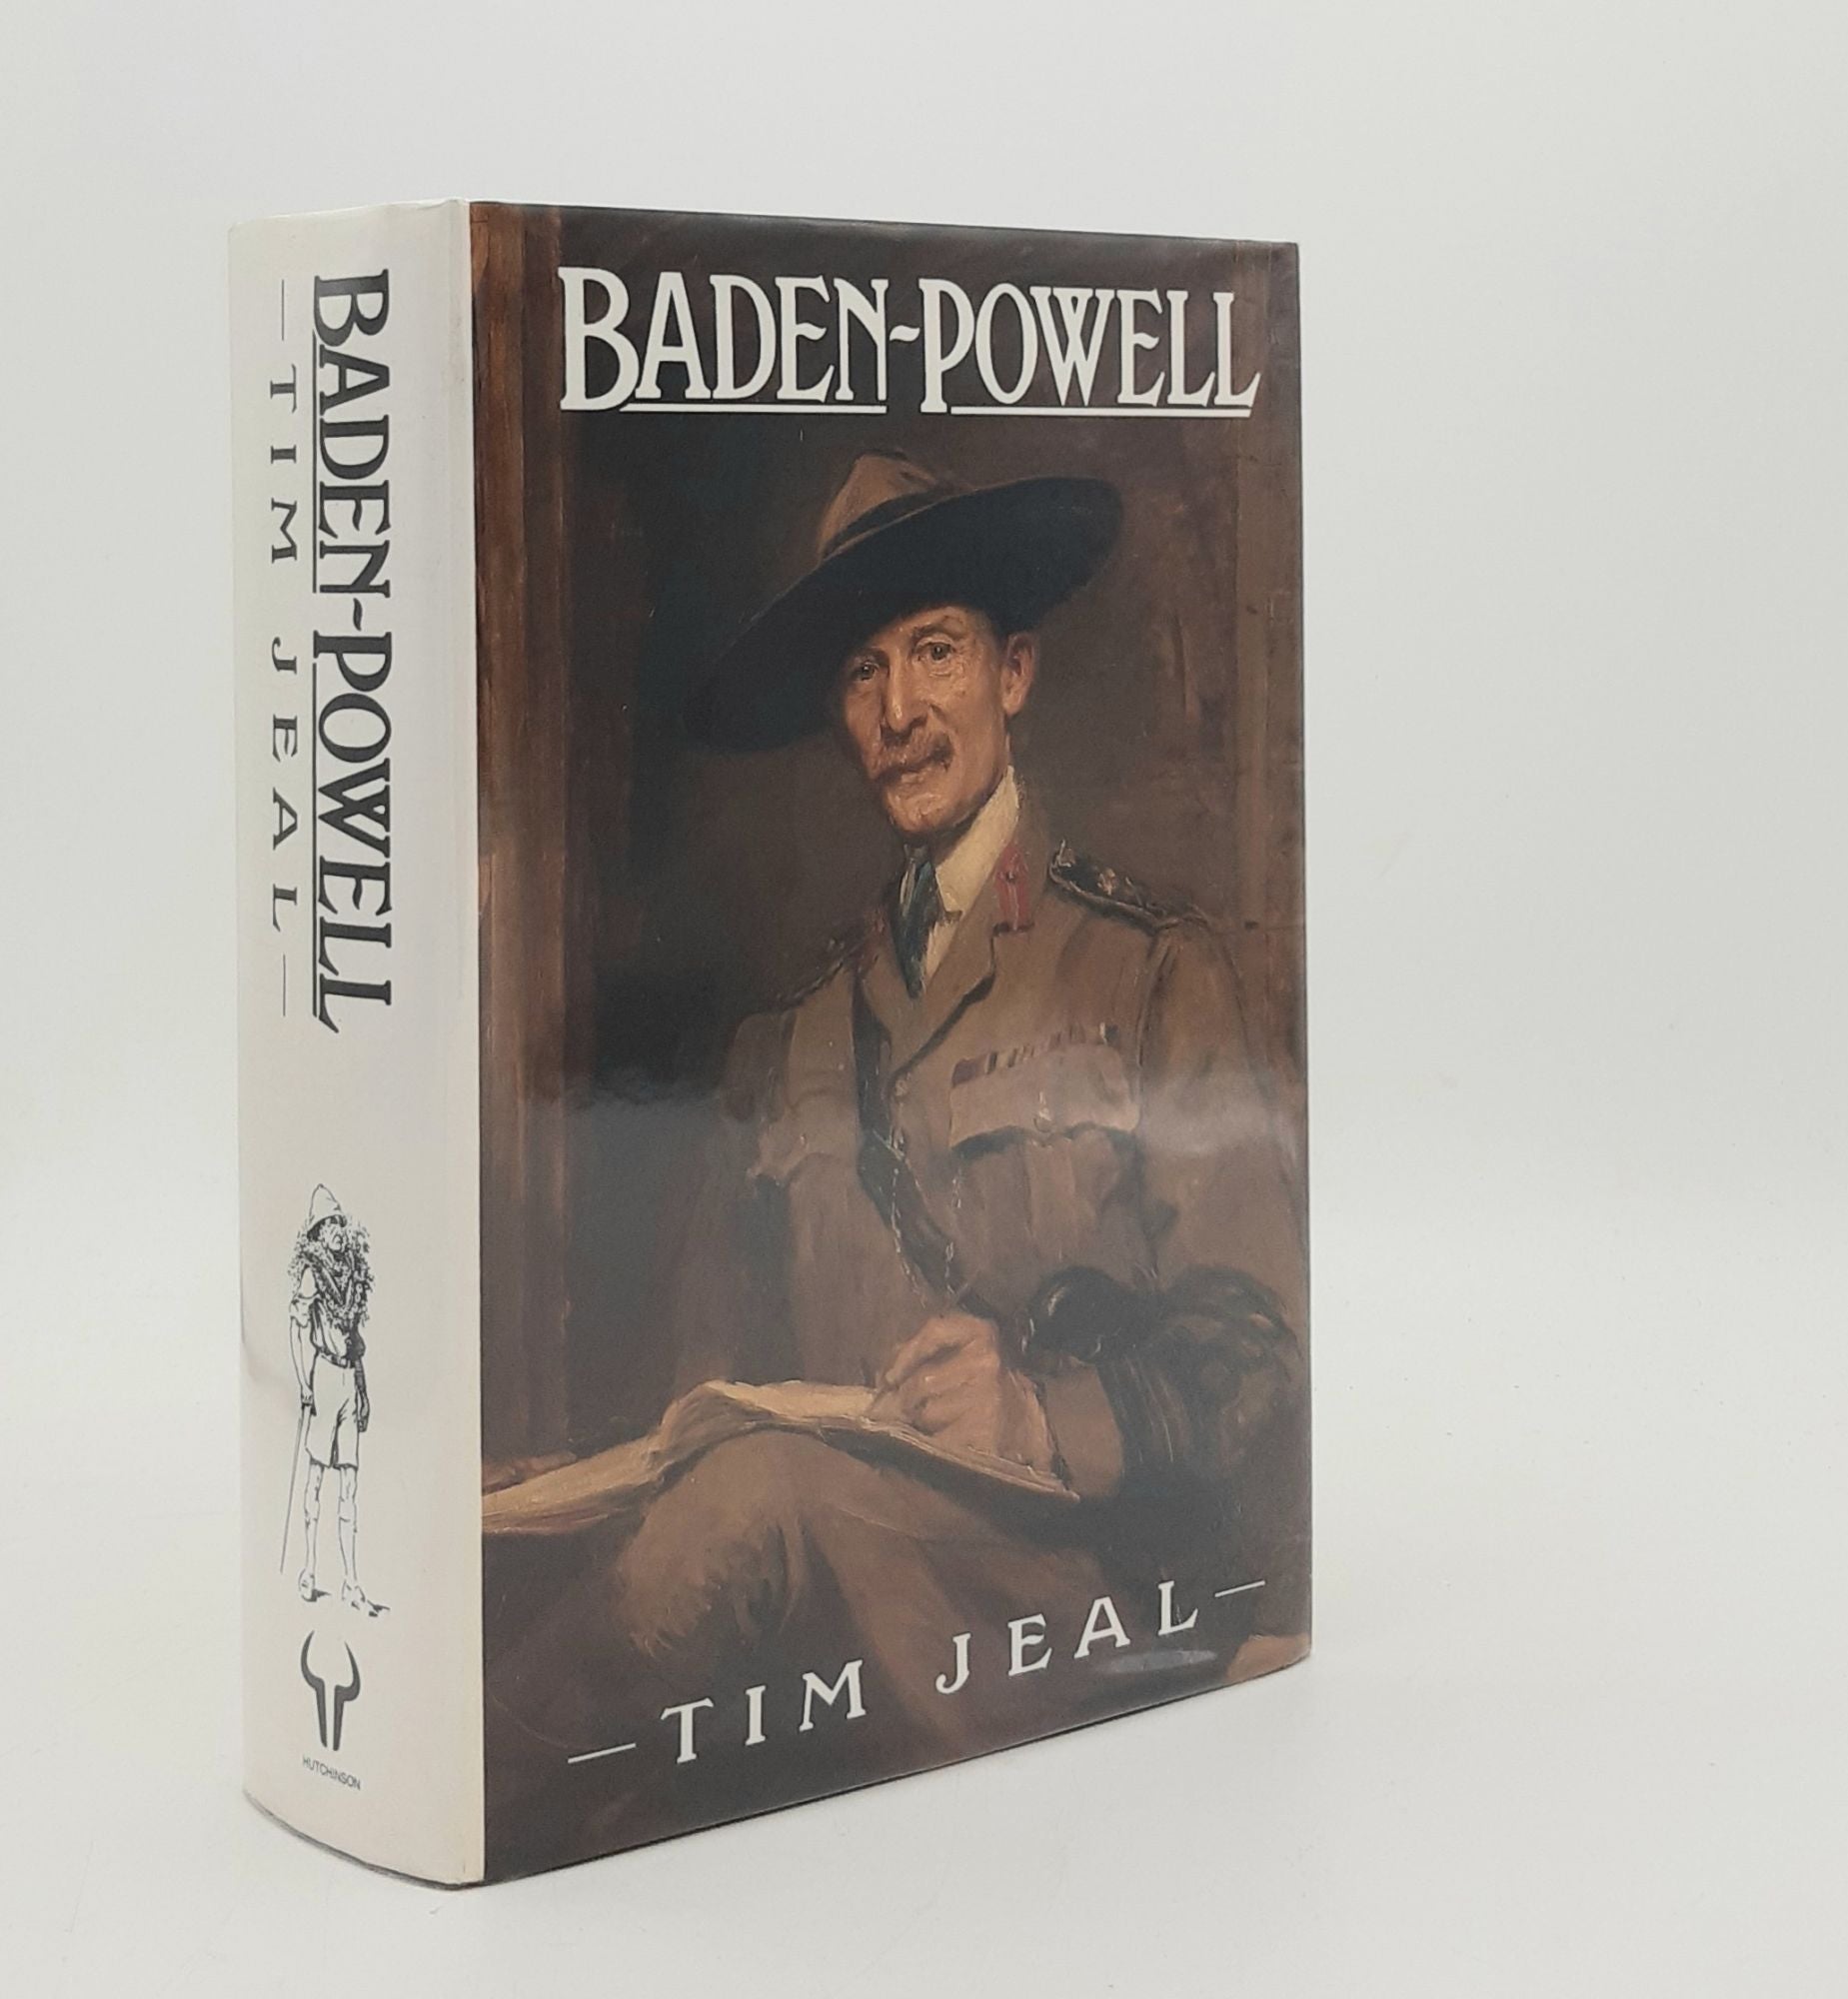 JEAL Tim - Baden-Powell